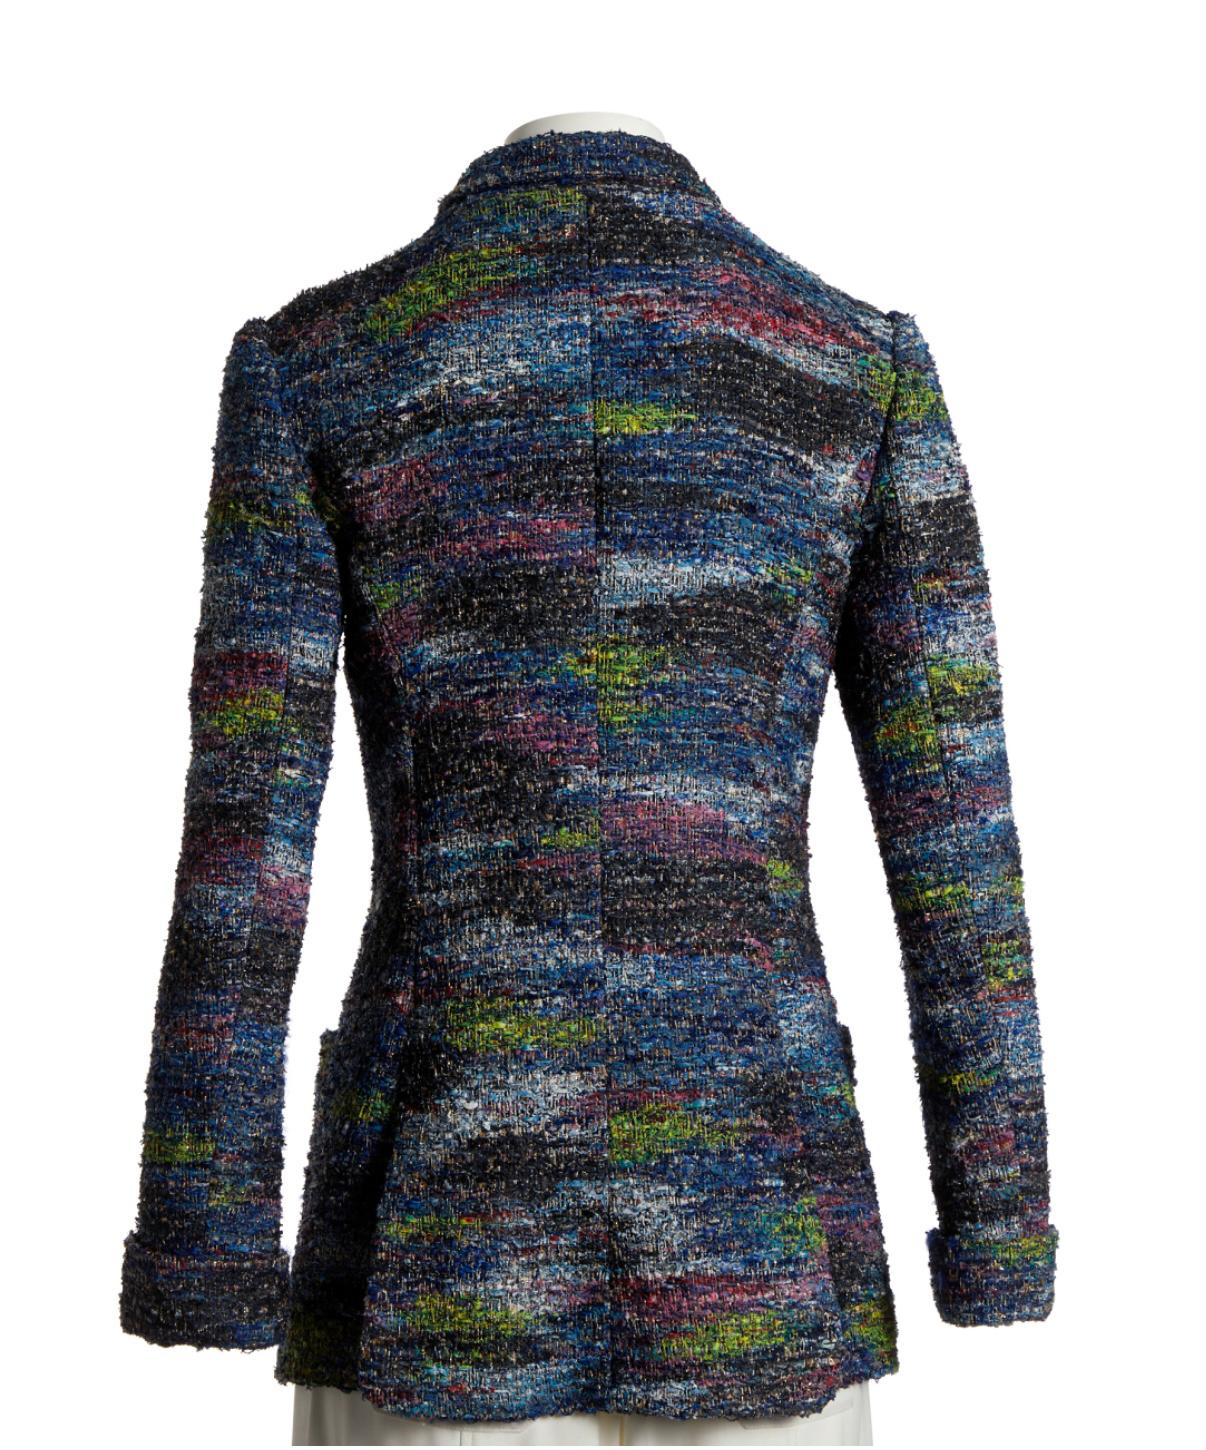 Chanel Supermodel Nata Vodianova Style Tweed Jacket 6